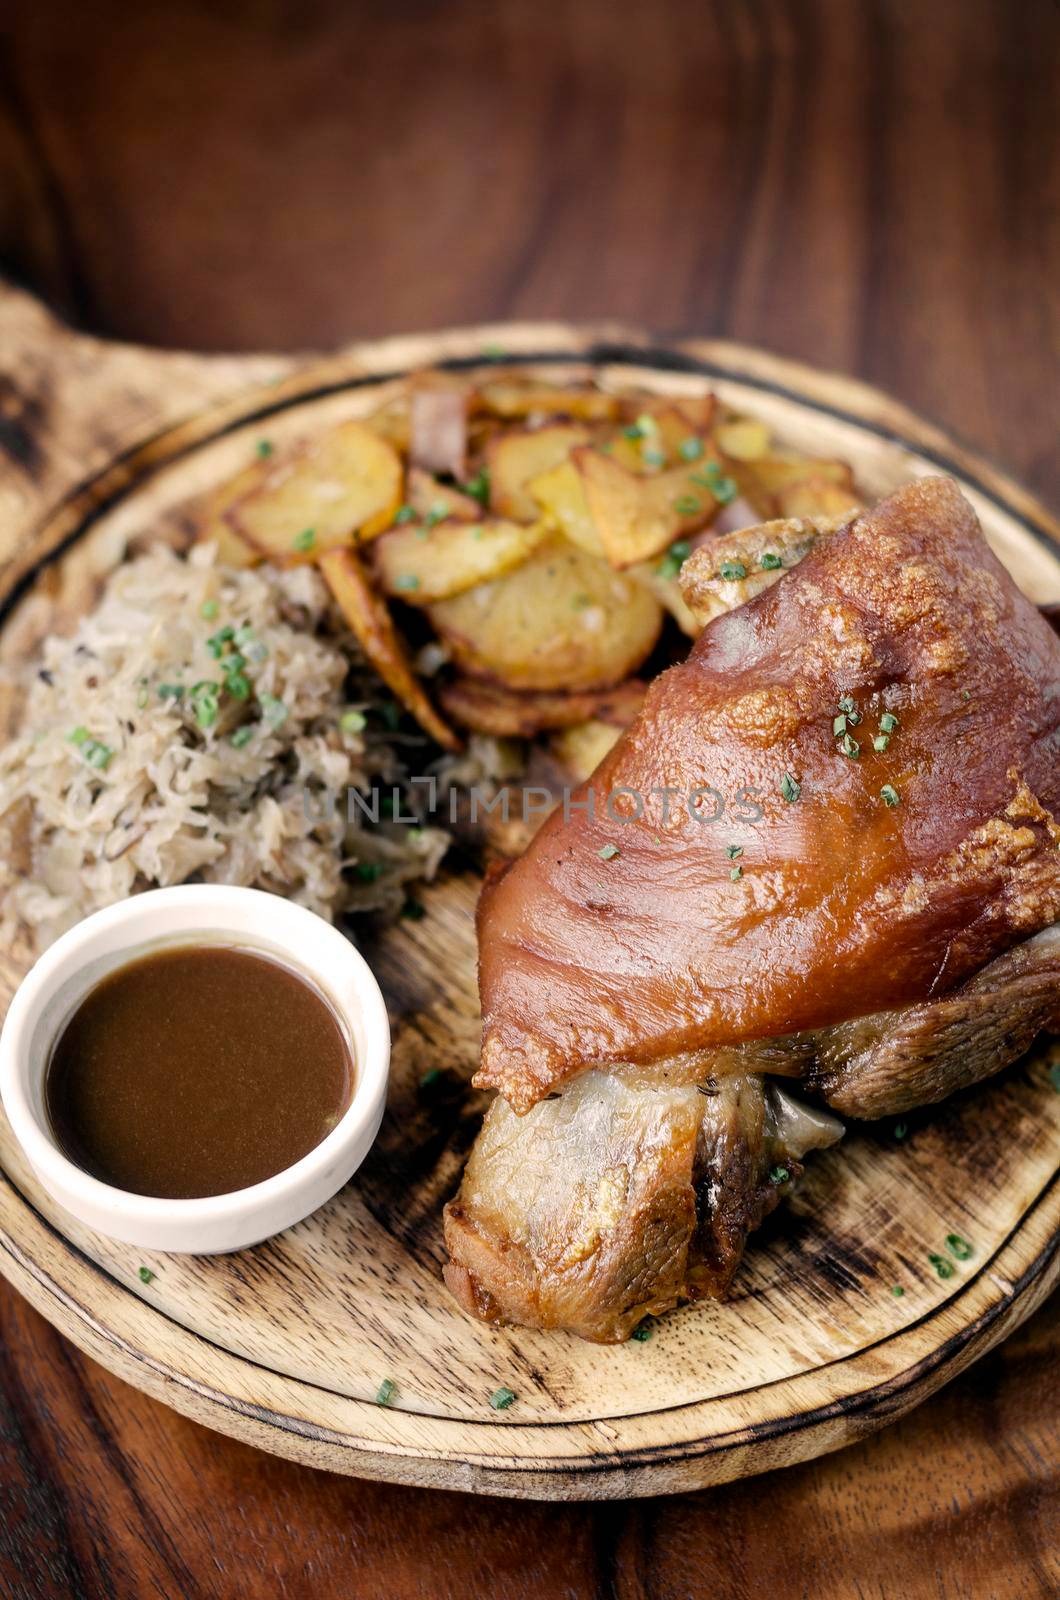 SCHWEINSHAXE traditional german pork knuckle with sauerkraut and potatoes meal by jackmalipan